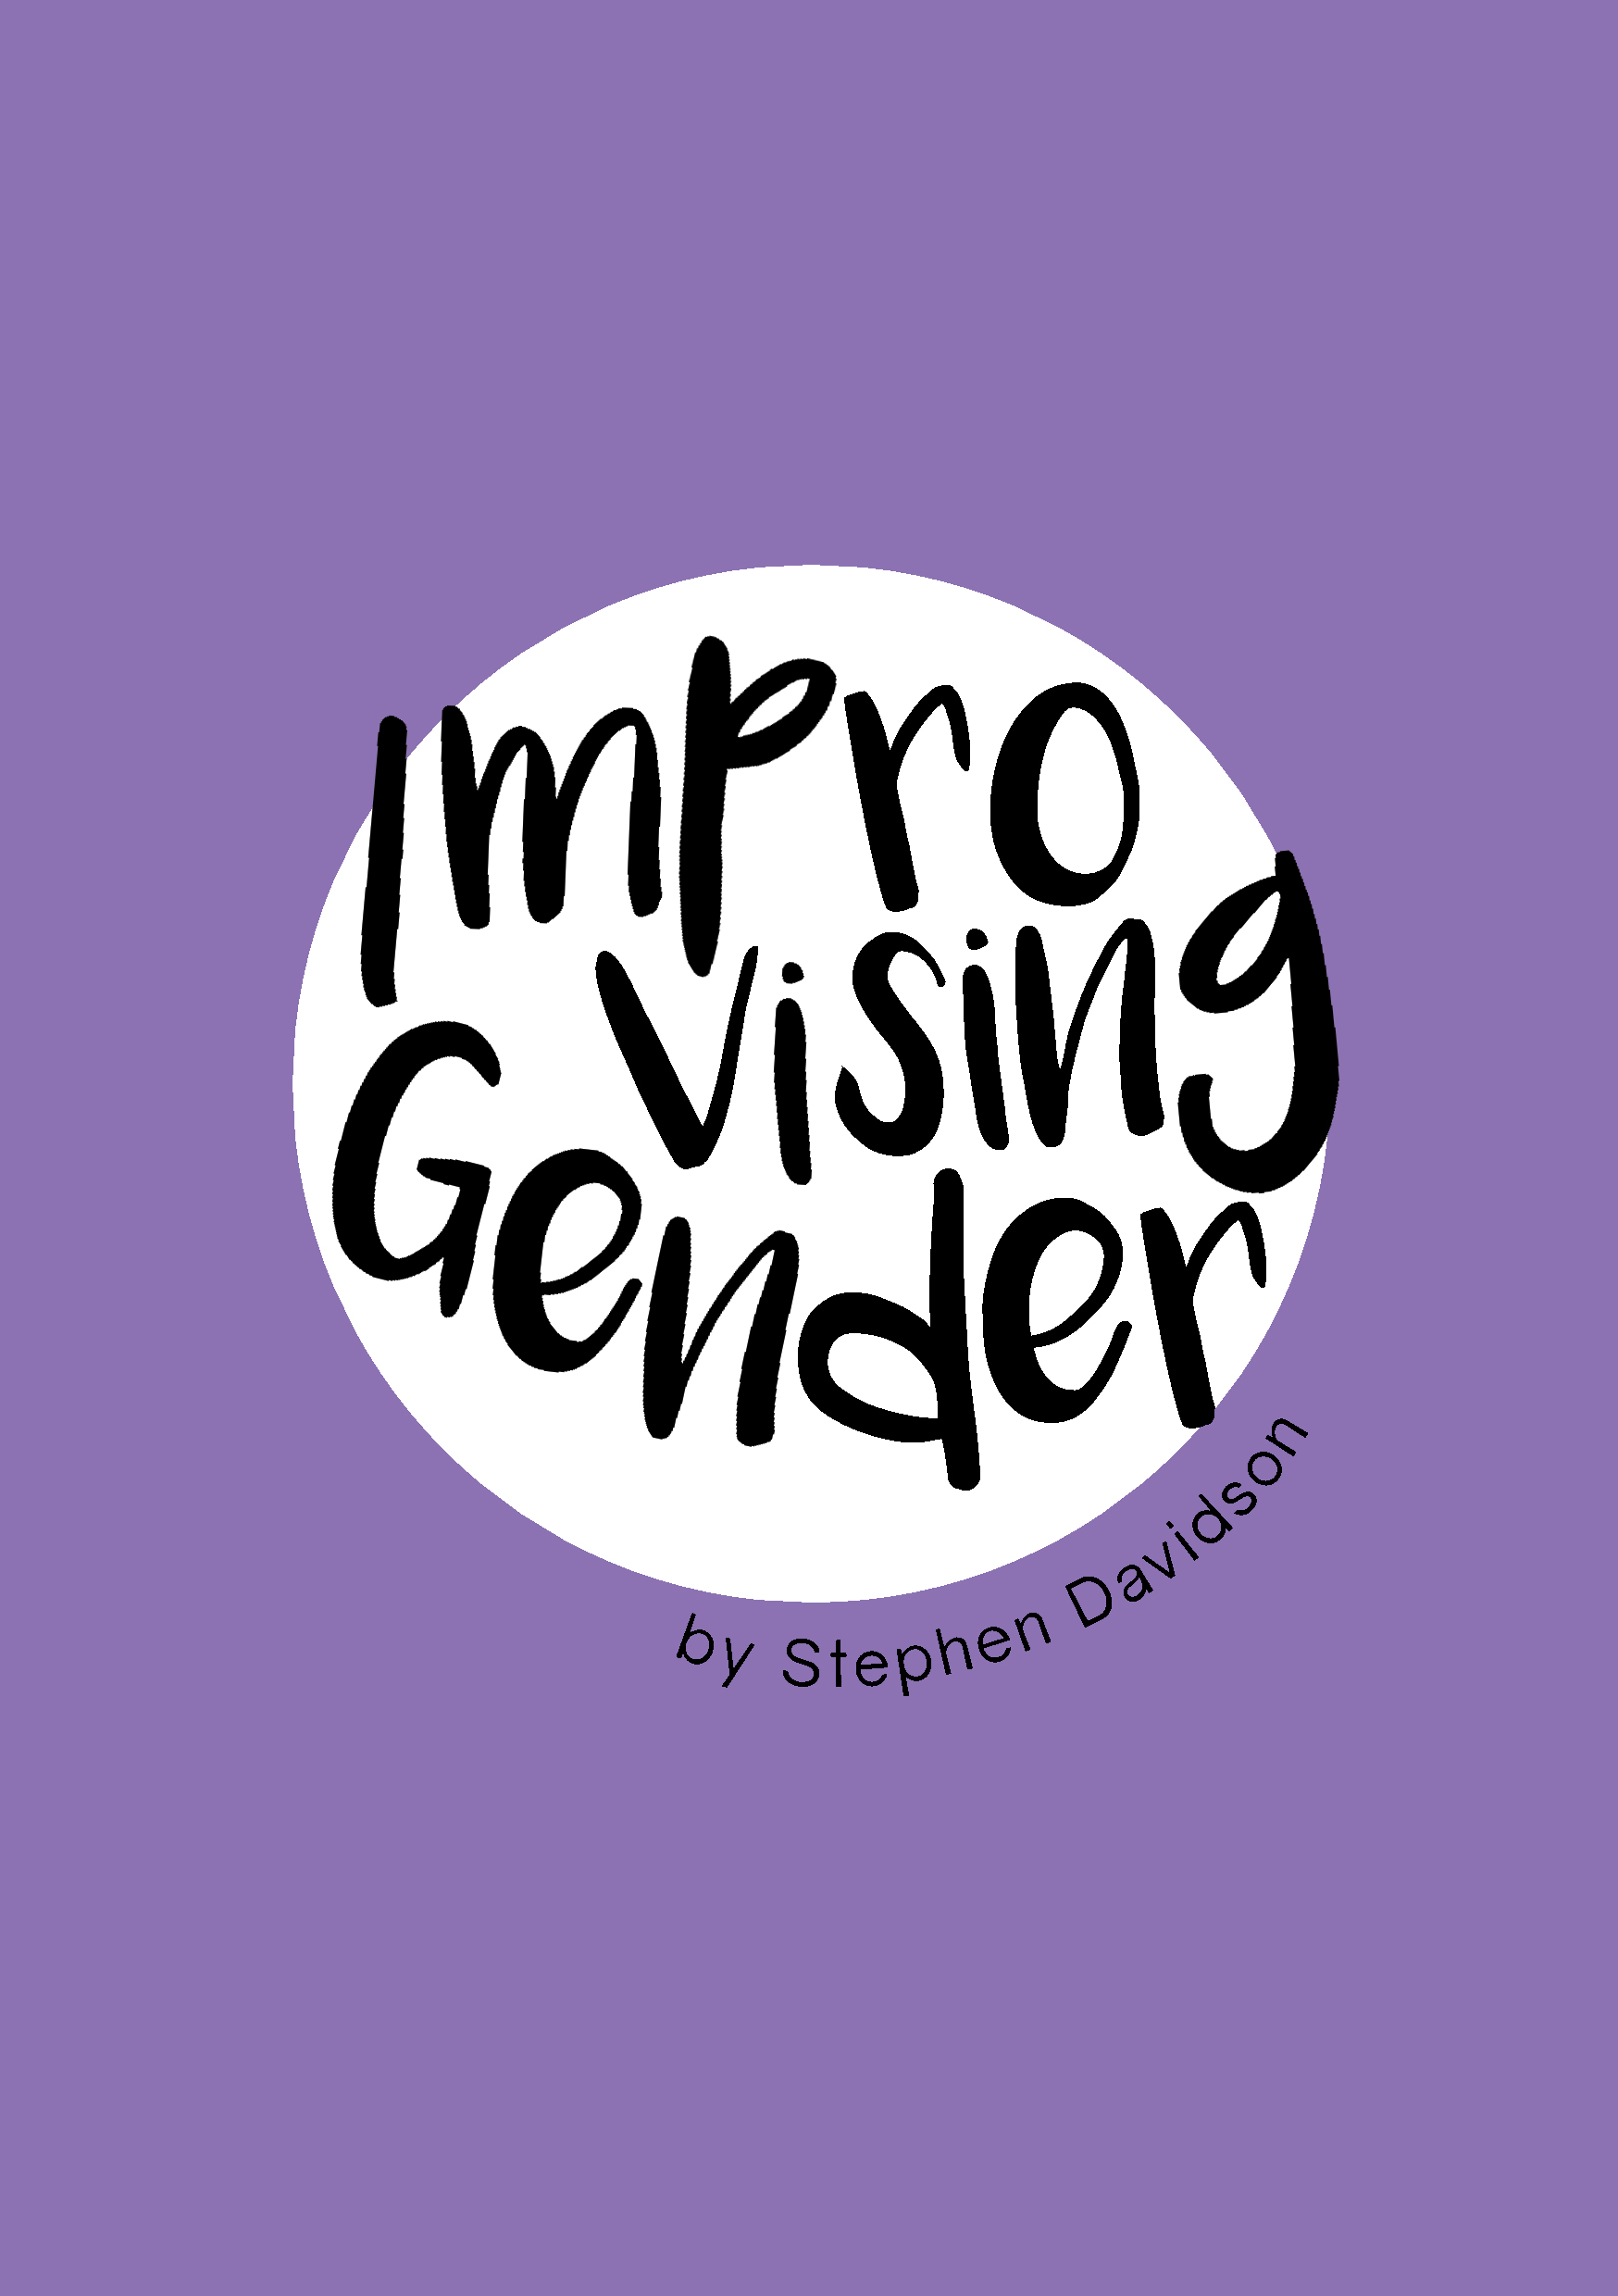 Improvising Gender (Stepehn Davidson)